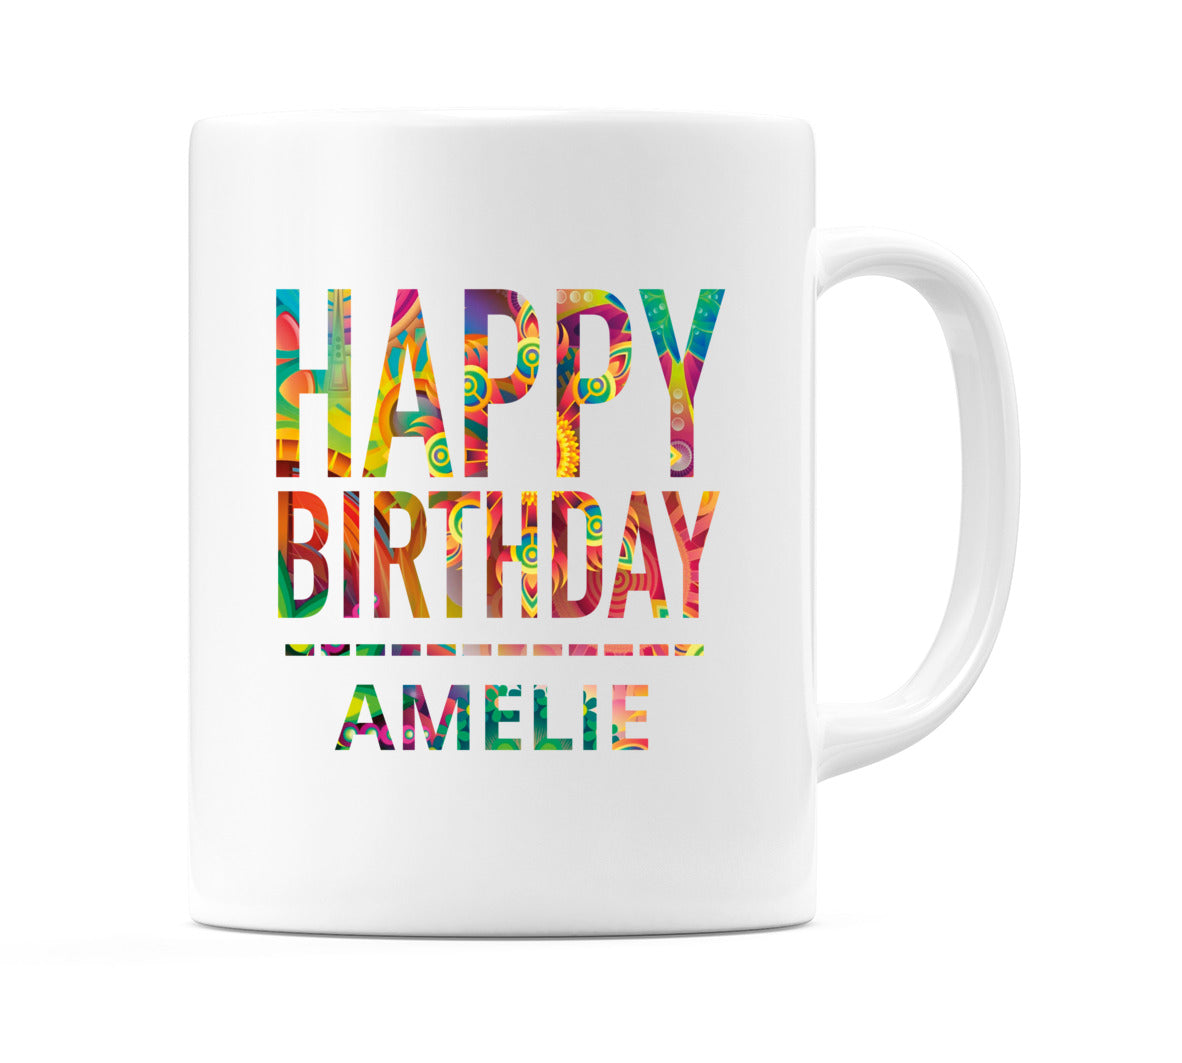 Happy Birthday Amelie (Tie Dye Effect) Mug Cup by WeDoMugs